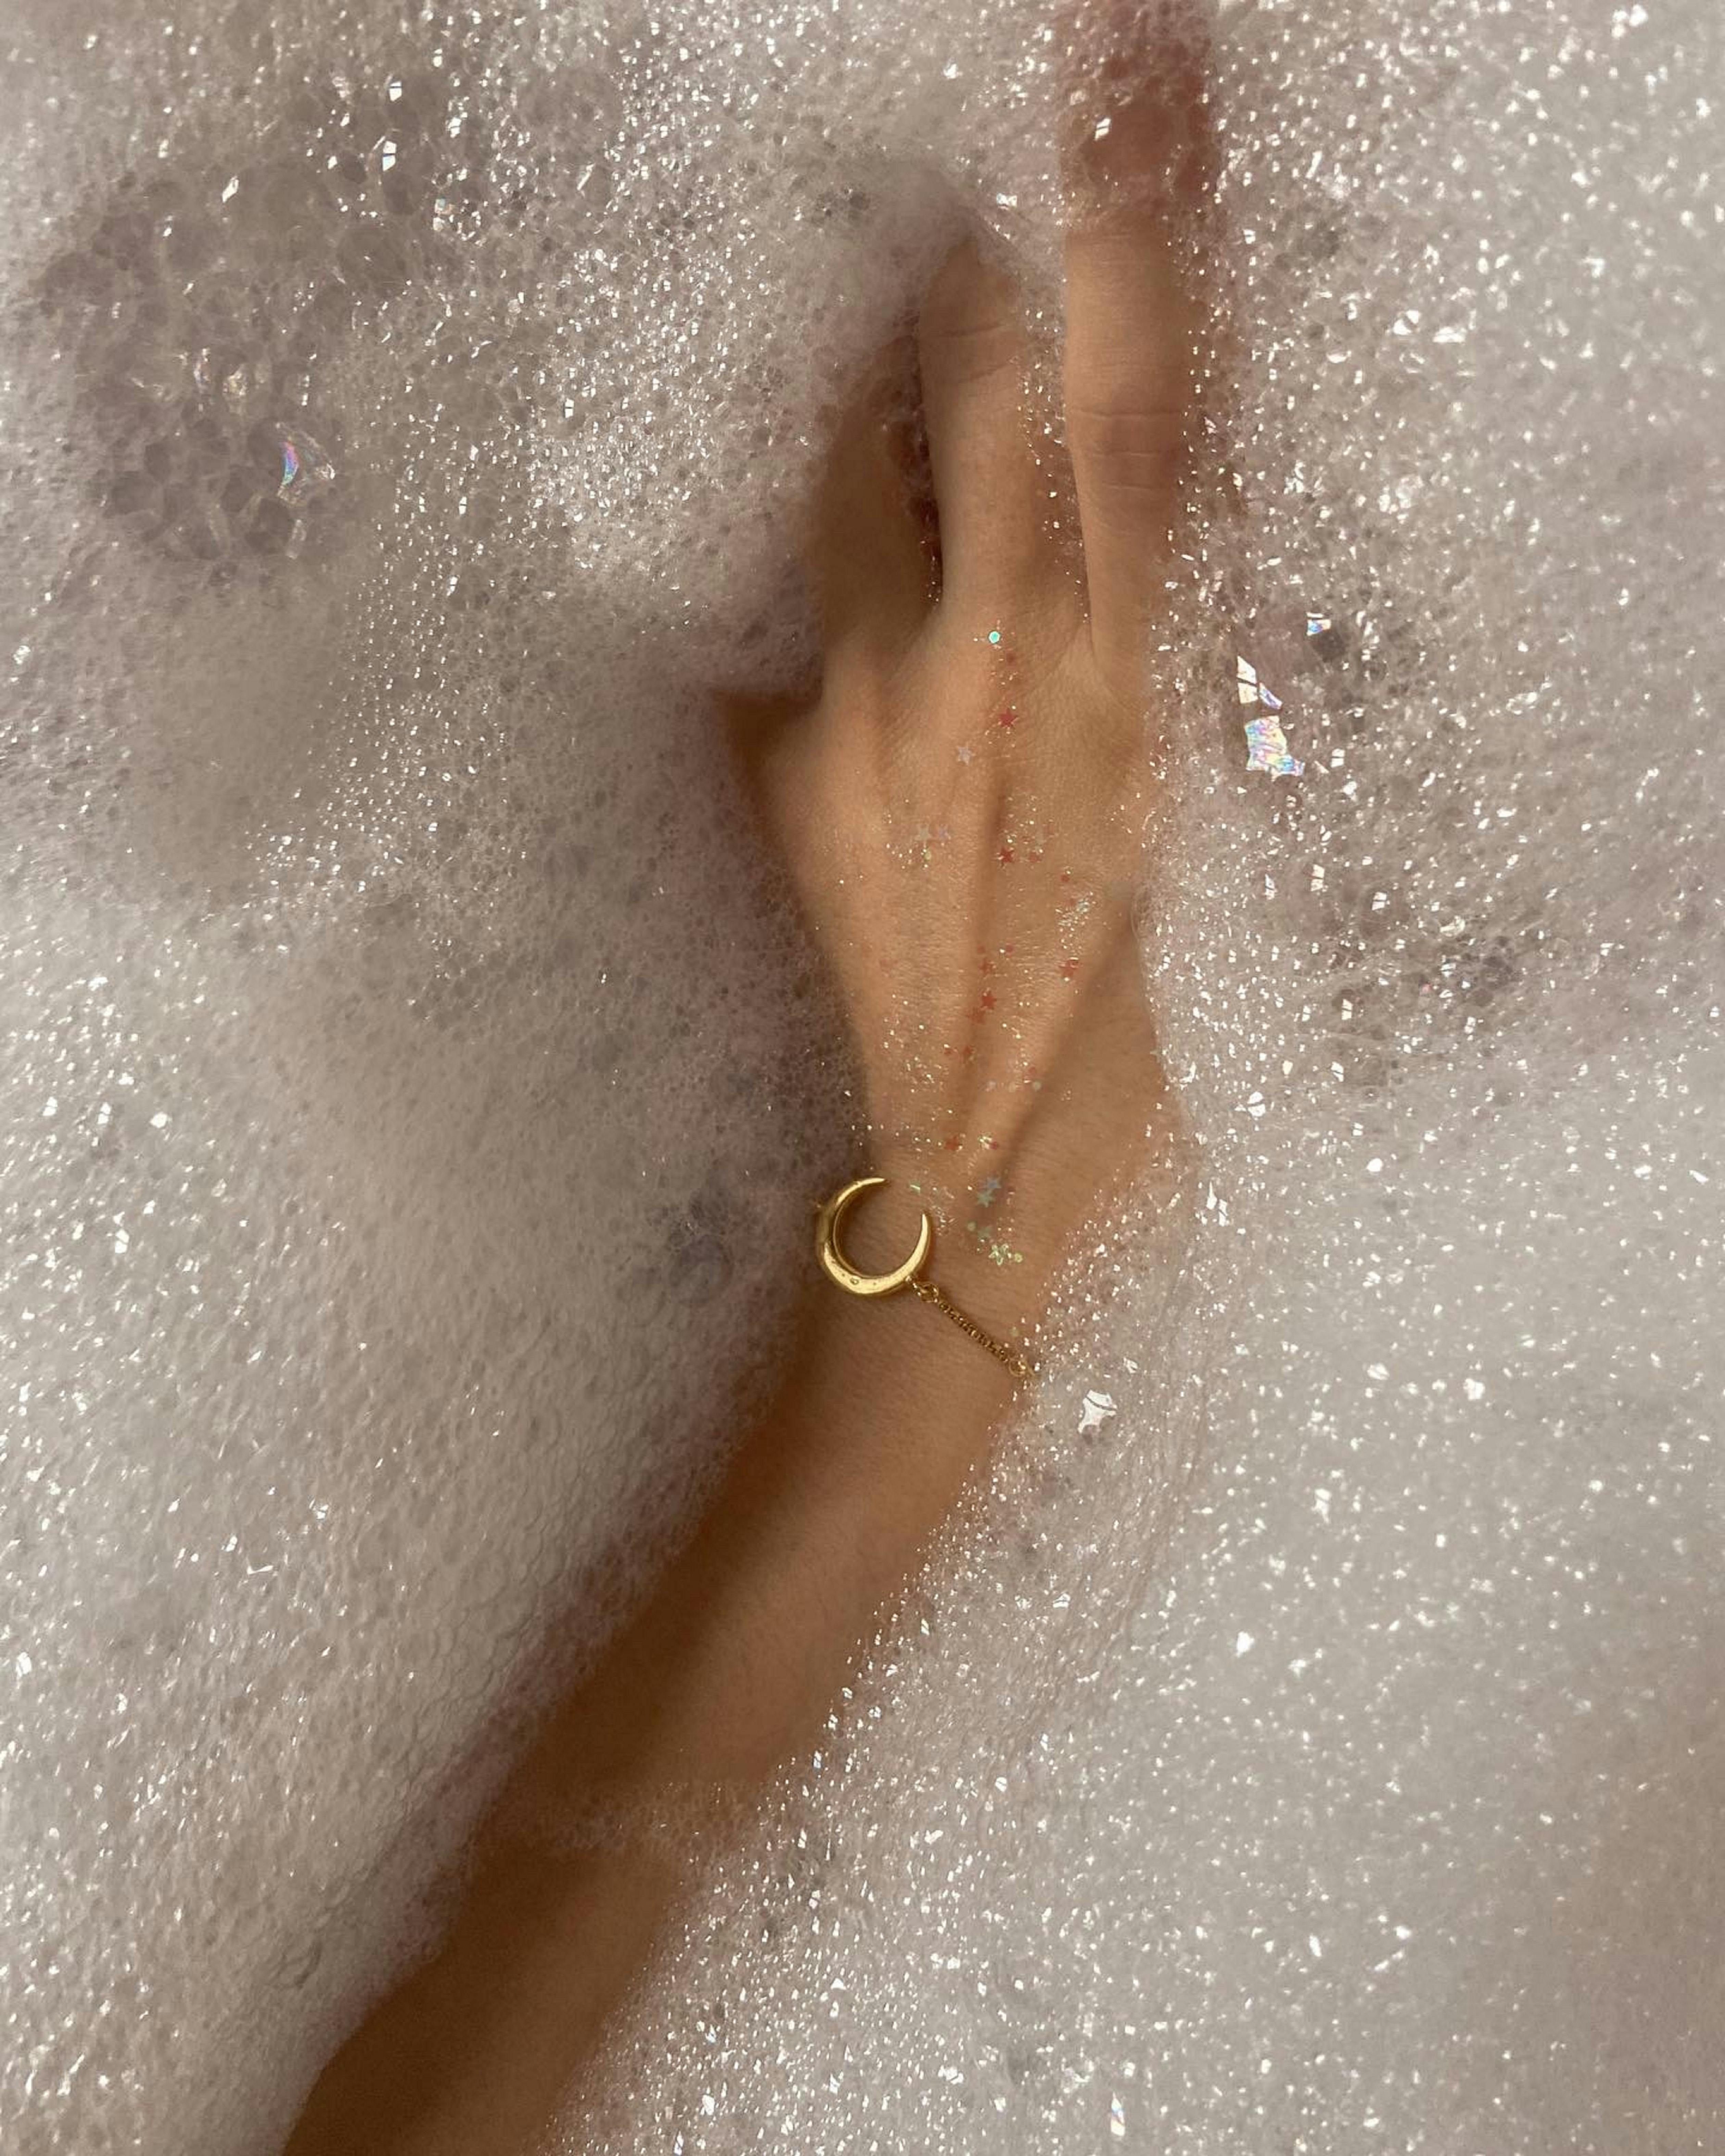 woman's hand in bath